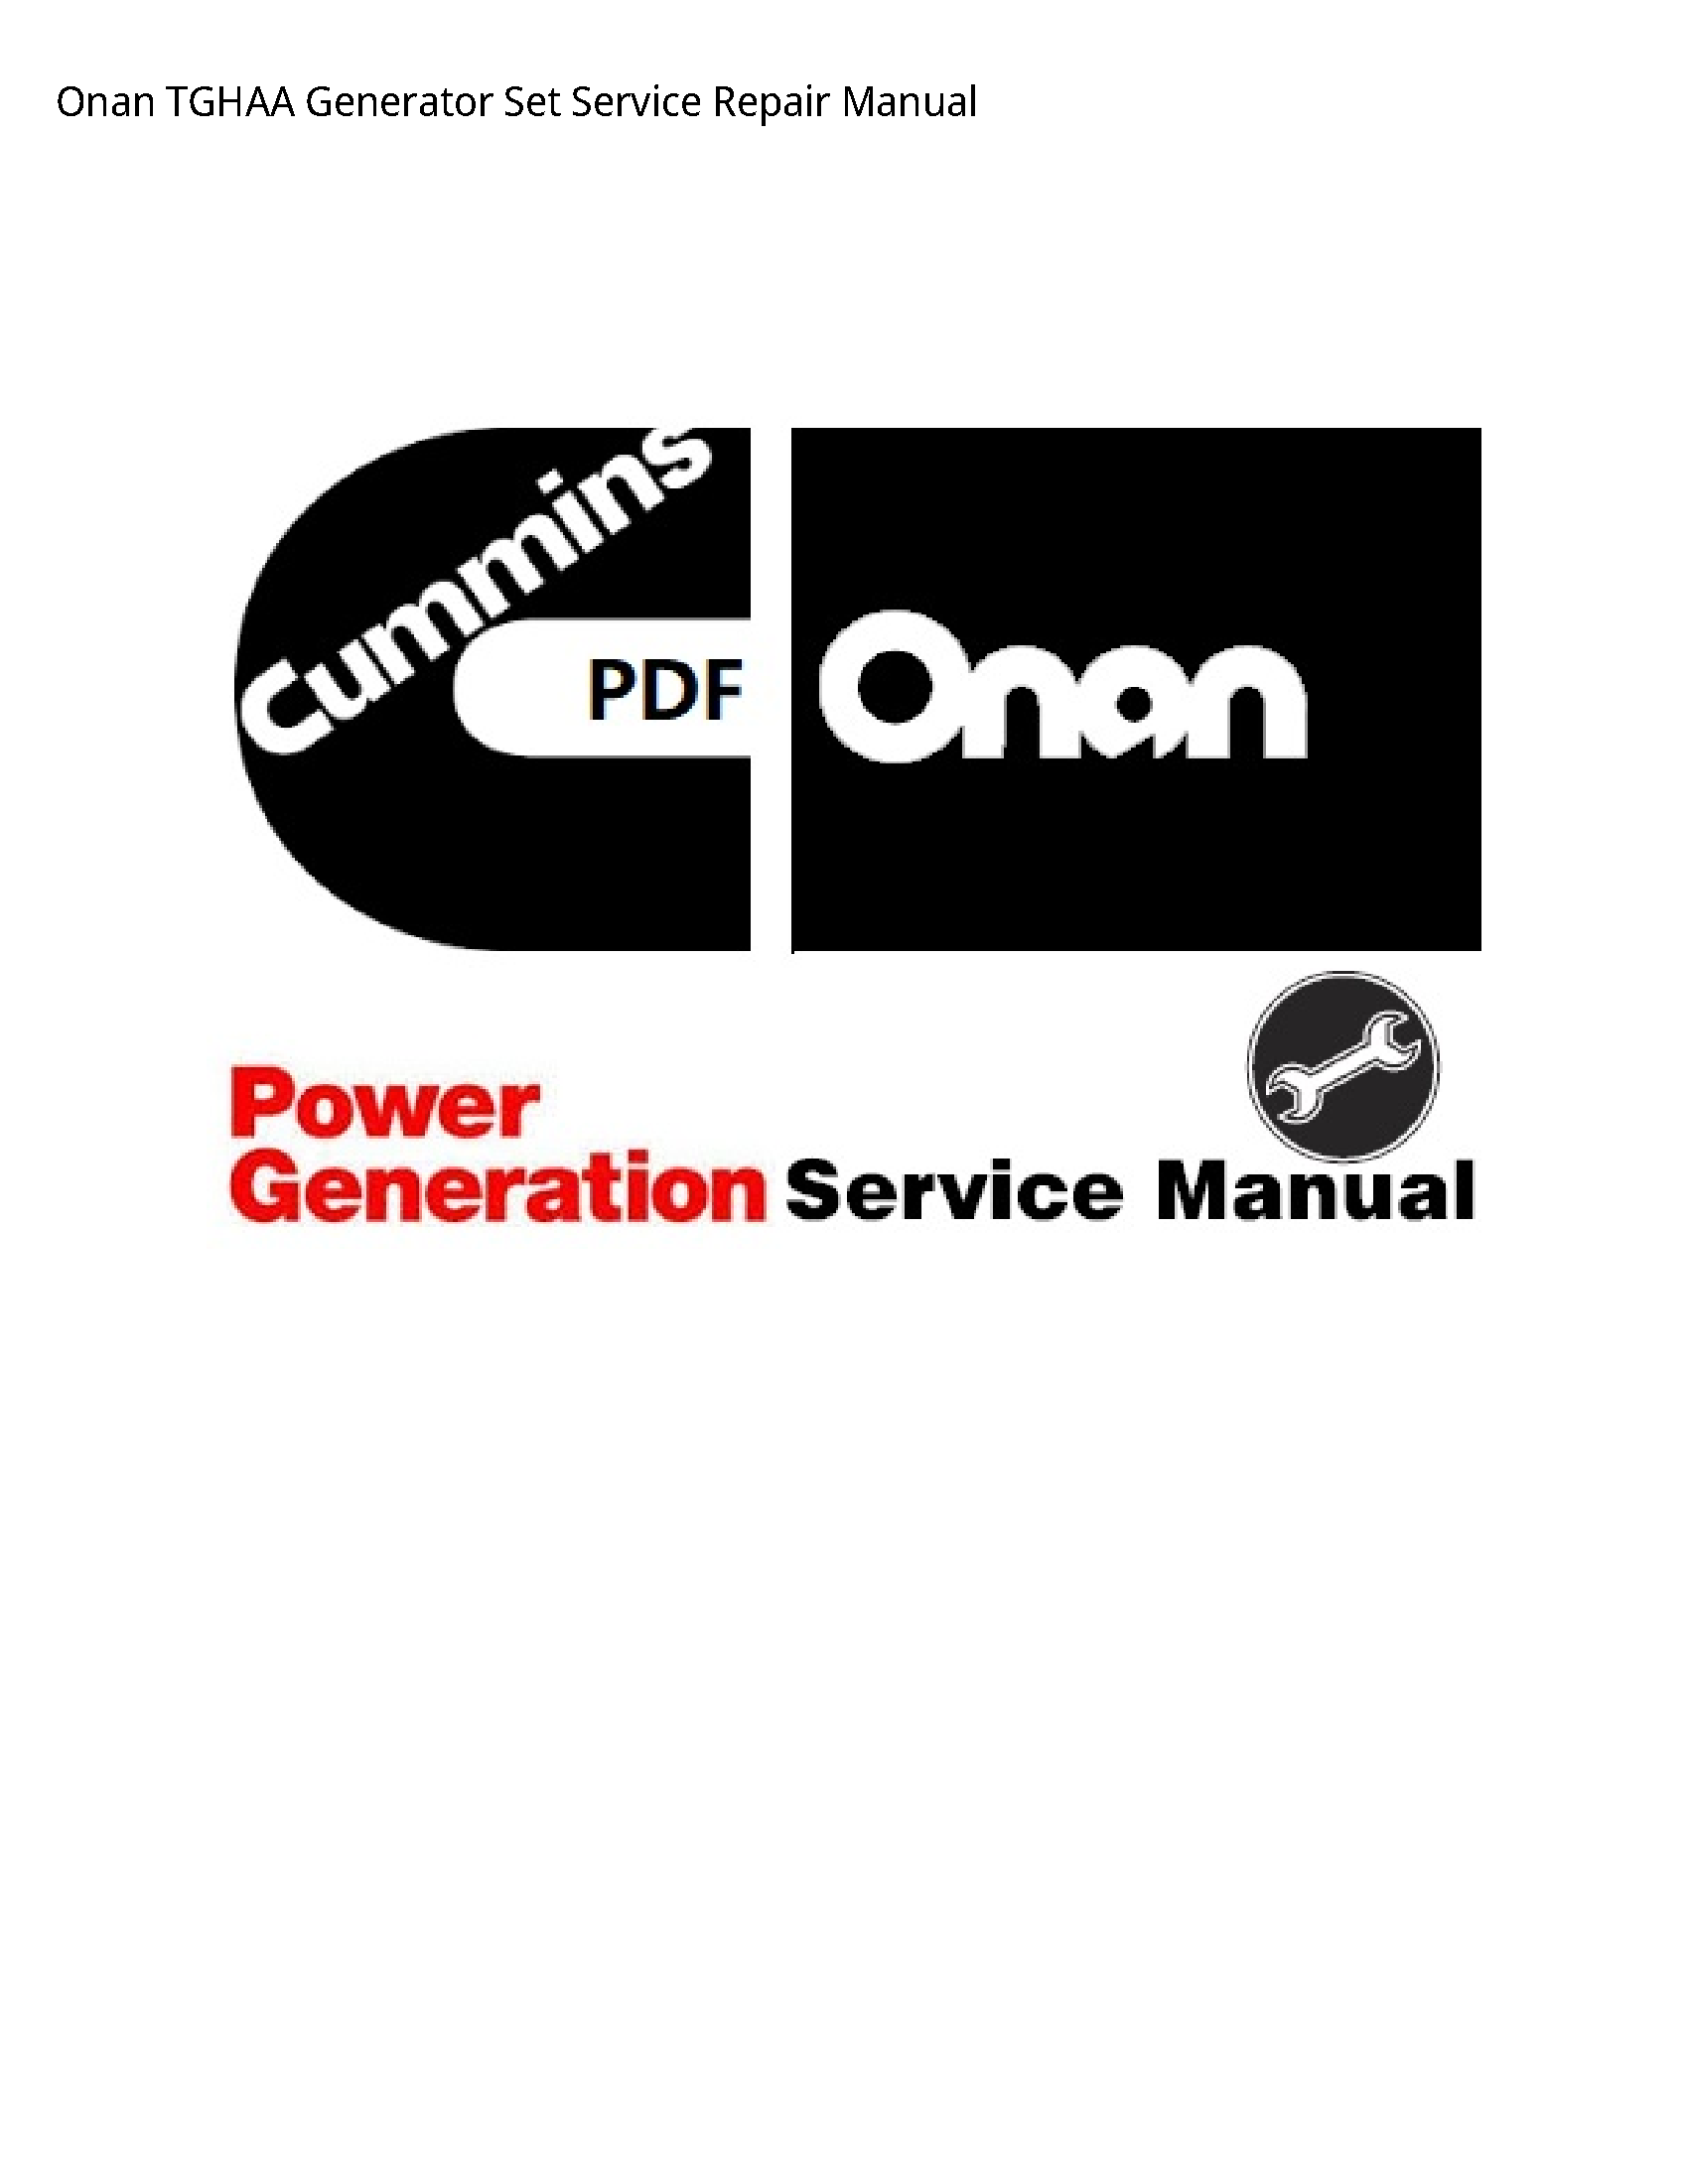 Onan TGHAA Generator Set manual